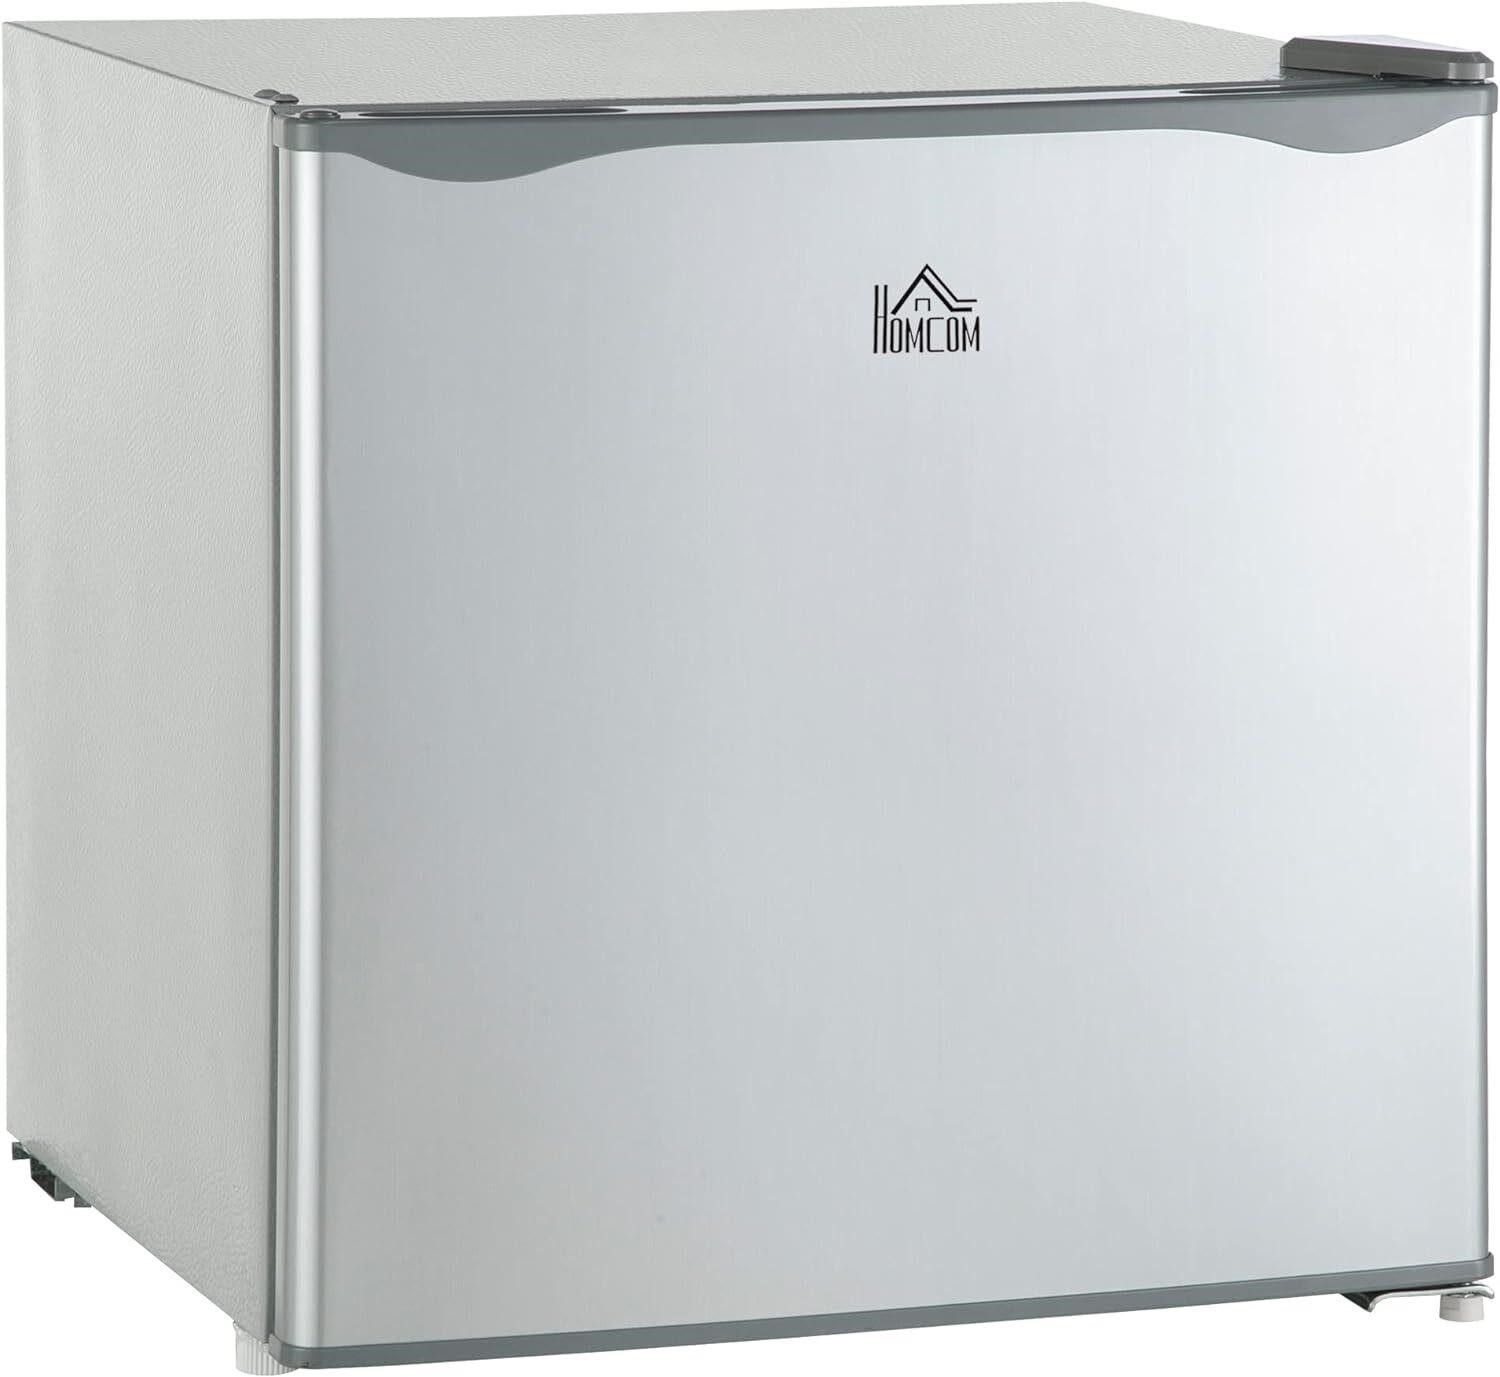 HOMCOM Mini Freezer Countertop  1.1 Cu.Ft Compact